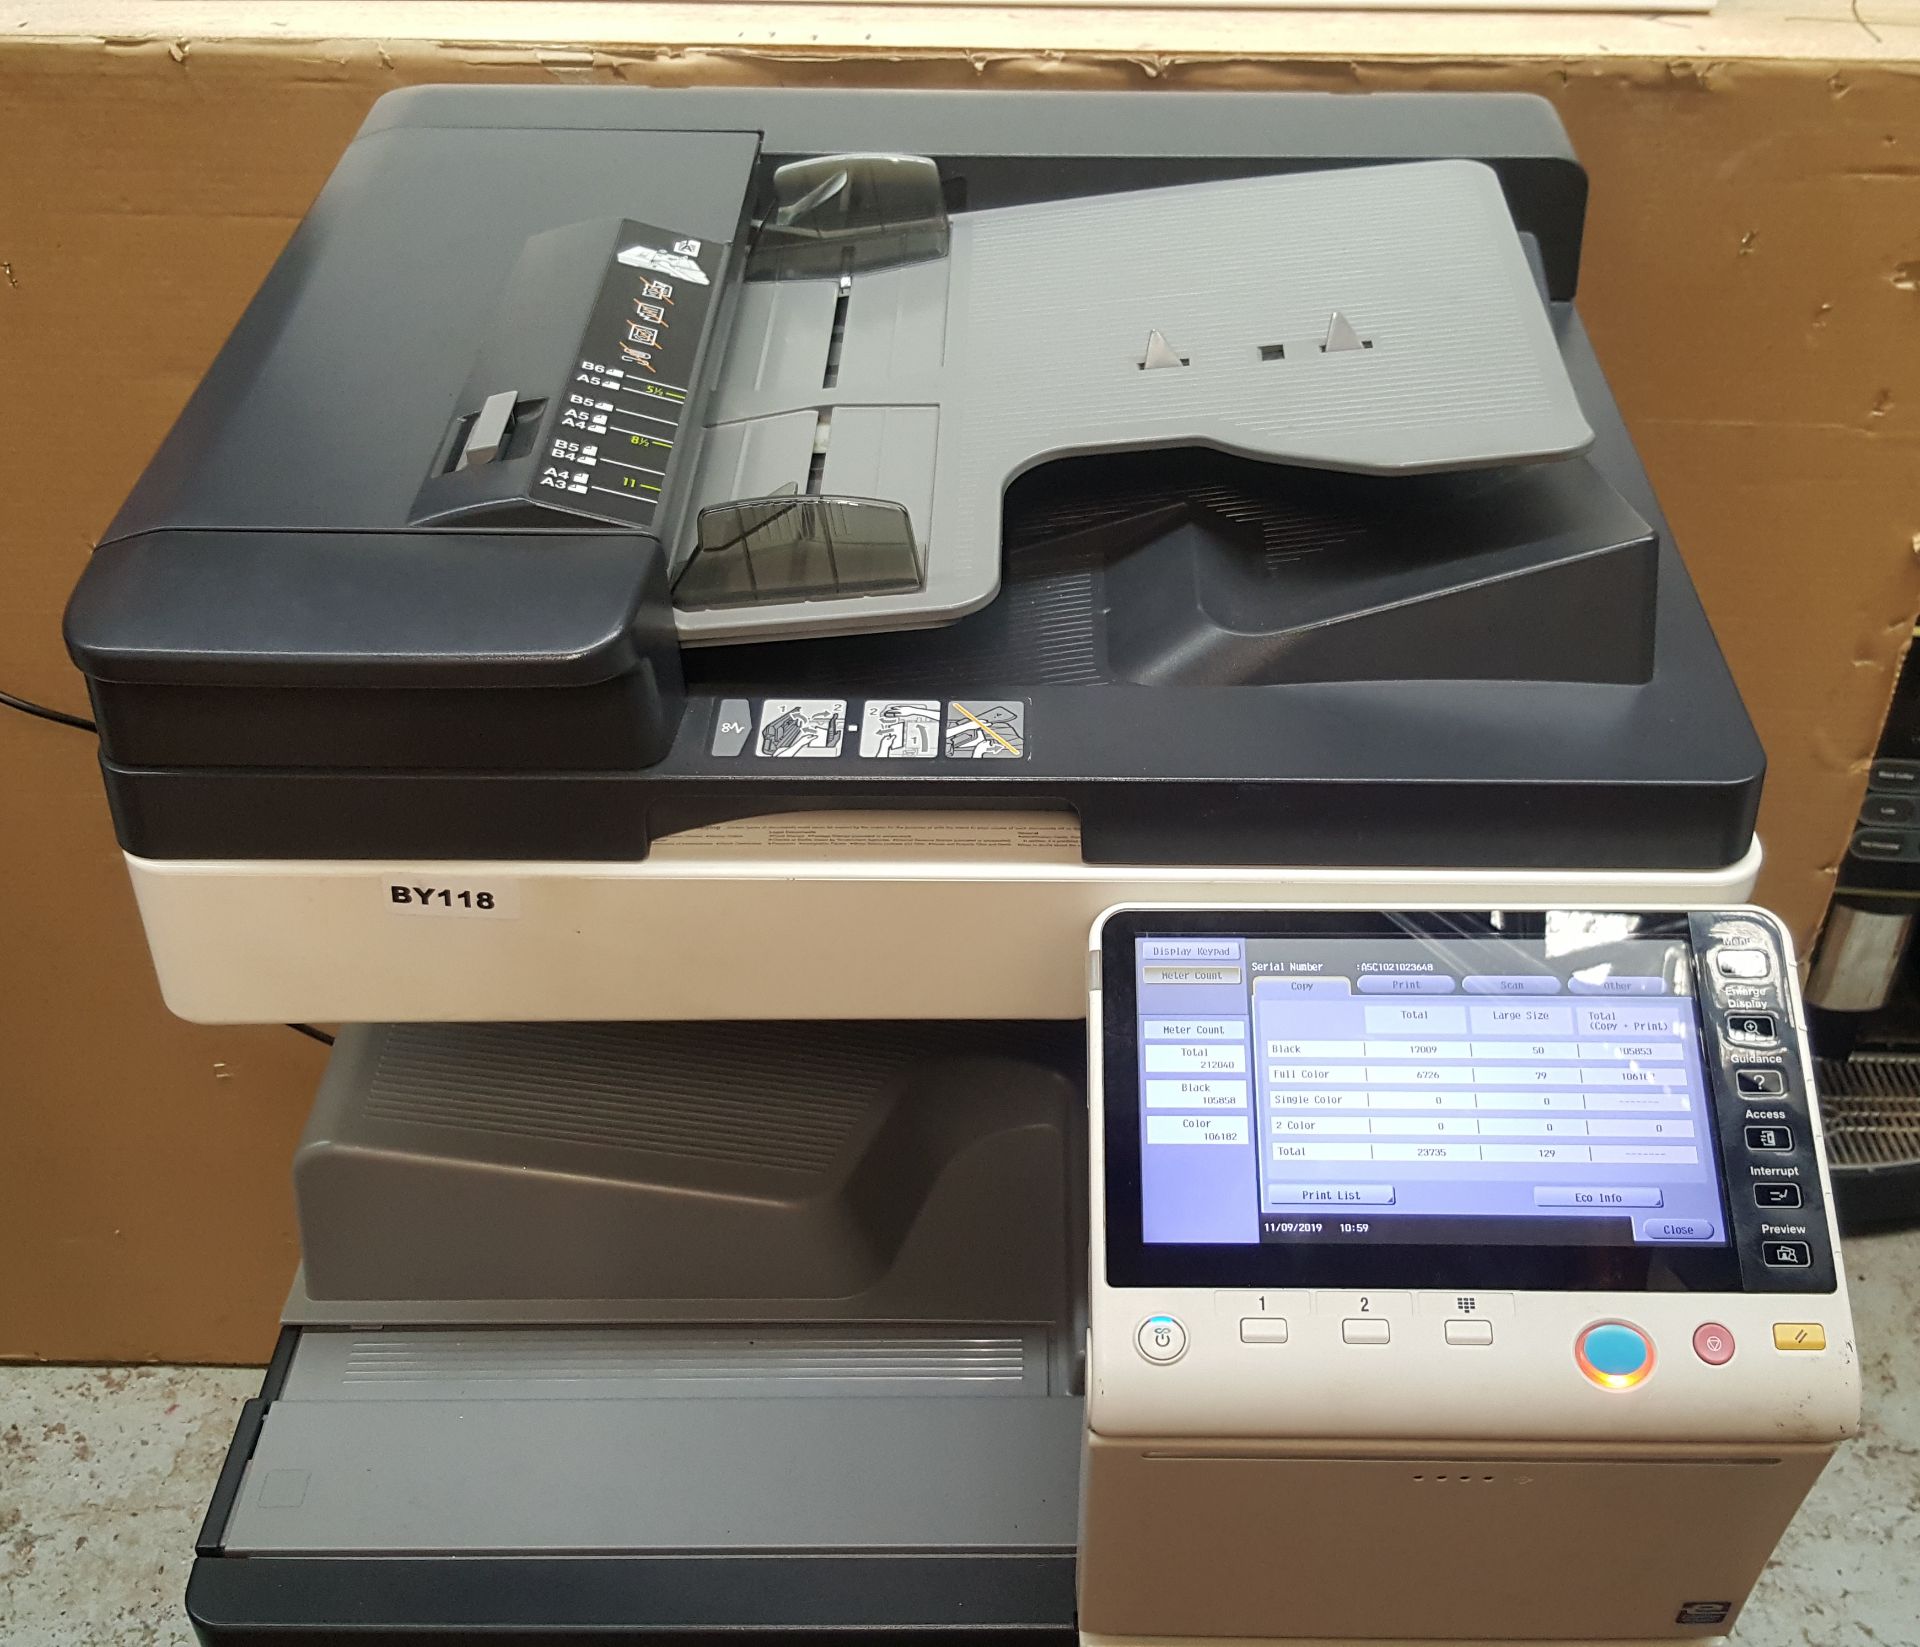 1 x Konica Minolta Bizhub C364e Colour Multifunction Office Photocopier Printer - BY118 - CL429 - - Image 6 of 7